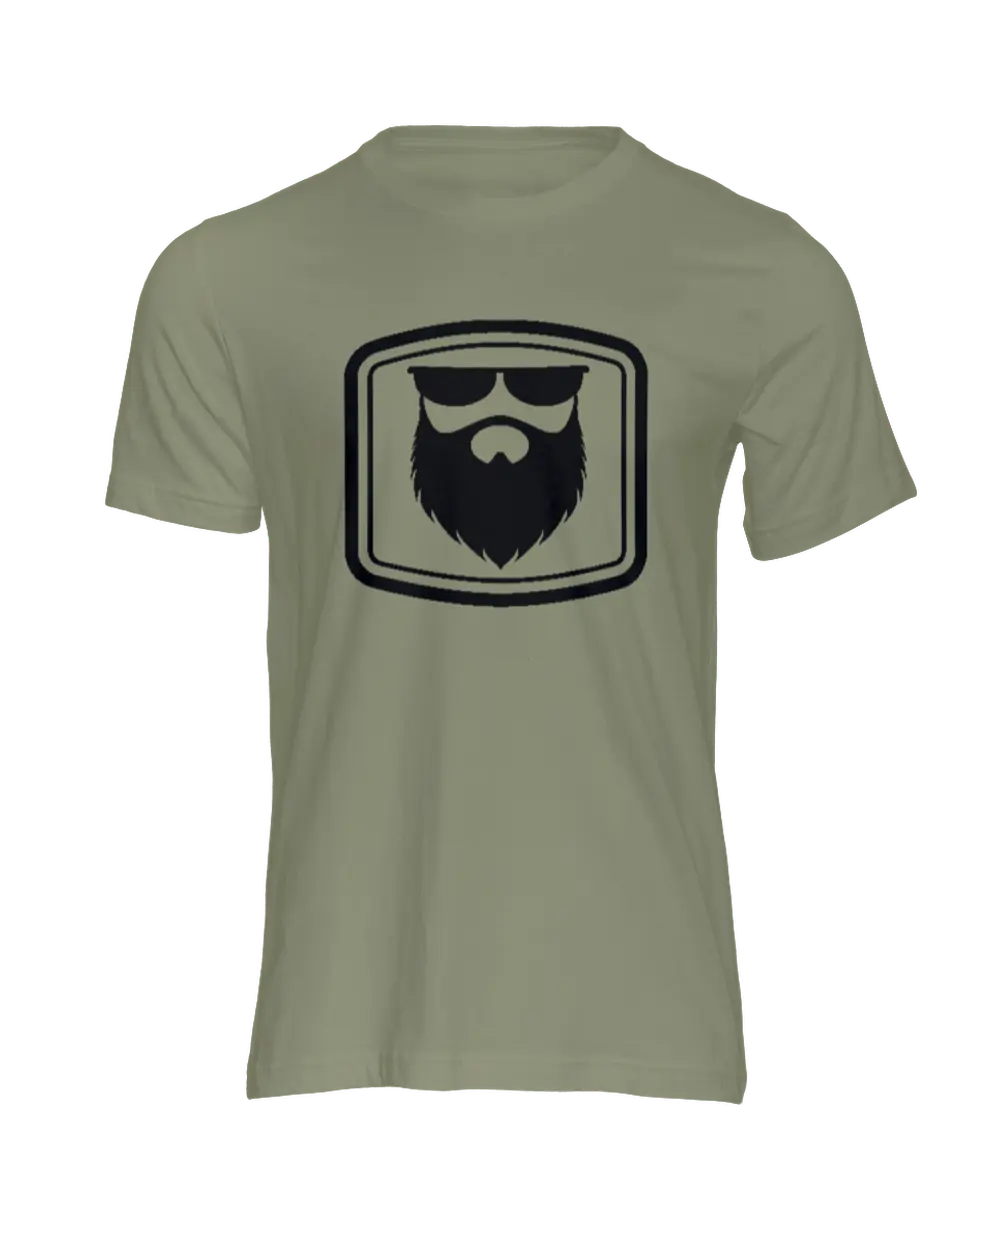 THE OG BEARD 2.0 Army Green Men's T-Shirt|T-Shirt